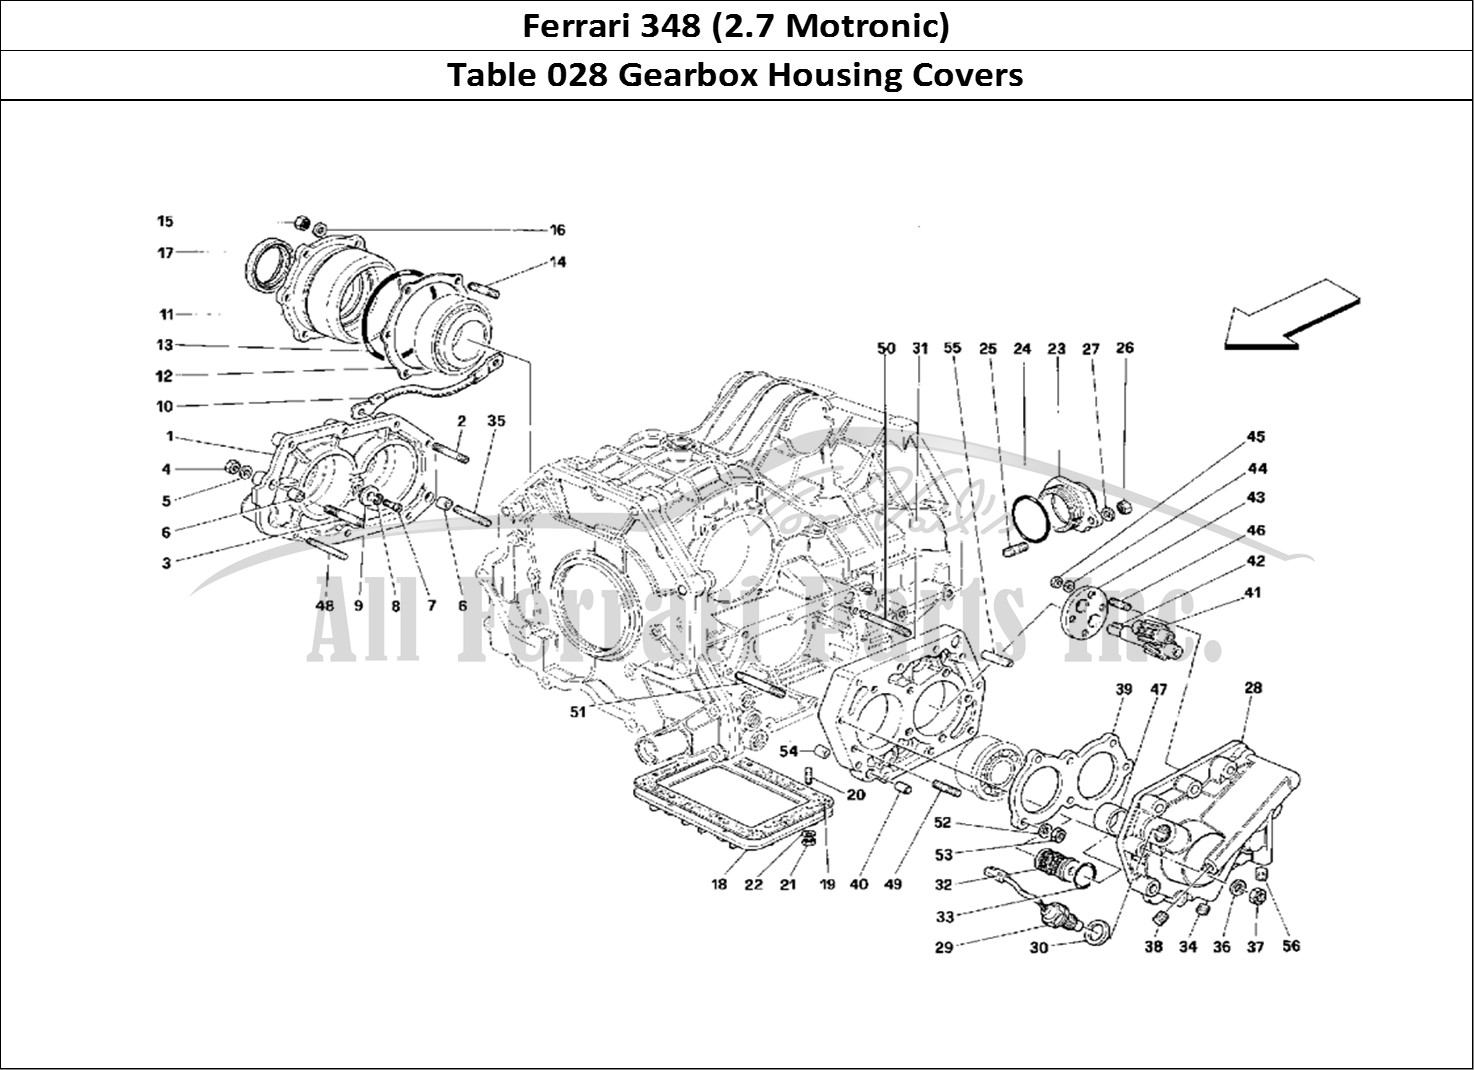 Ferrari Parts Ferrari 348 (2.7 Motronic) Page 028 Gearbox Covers